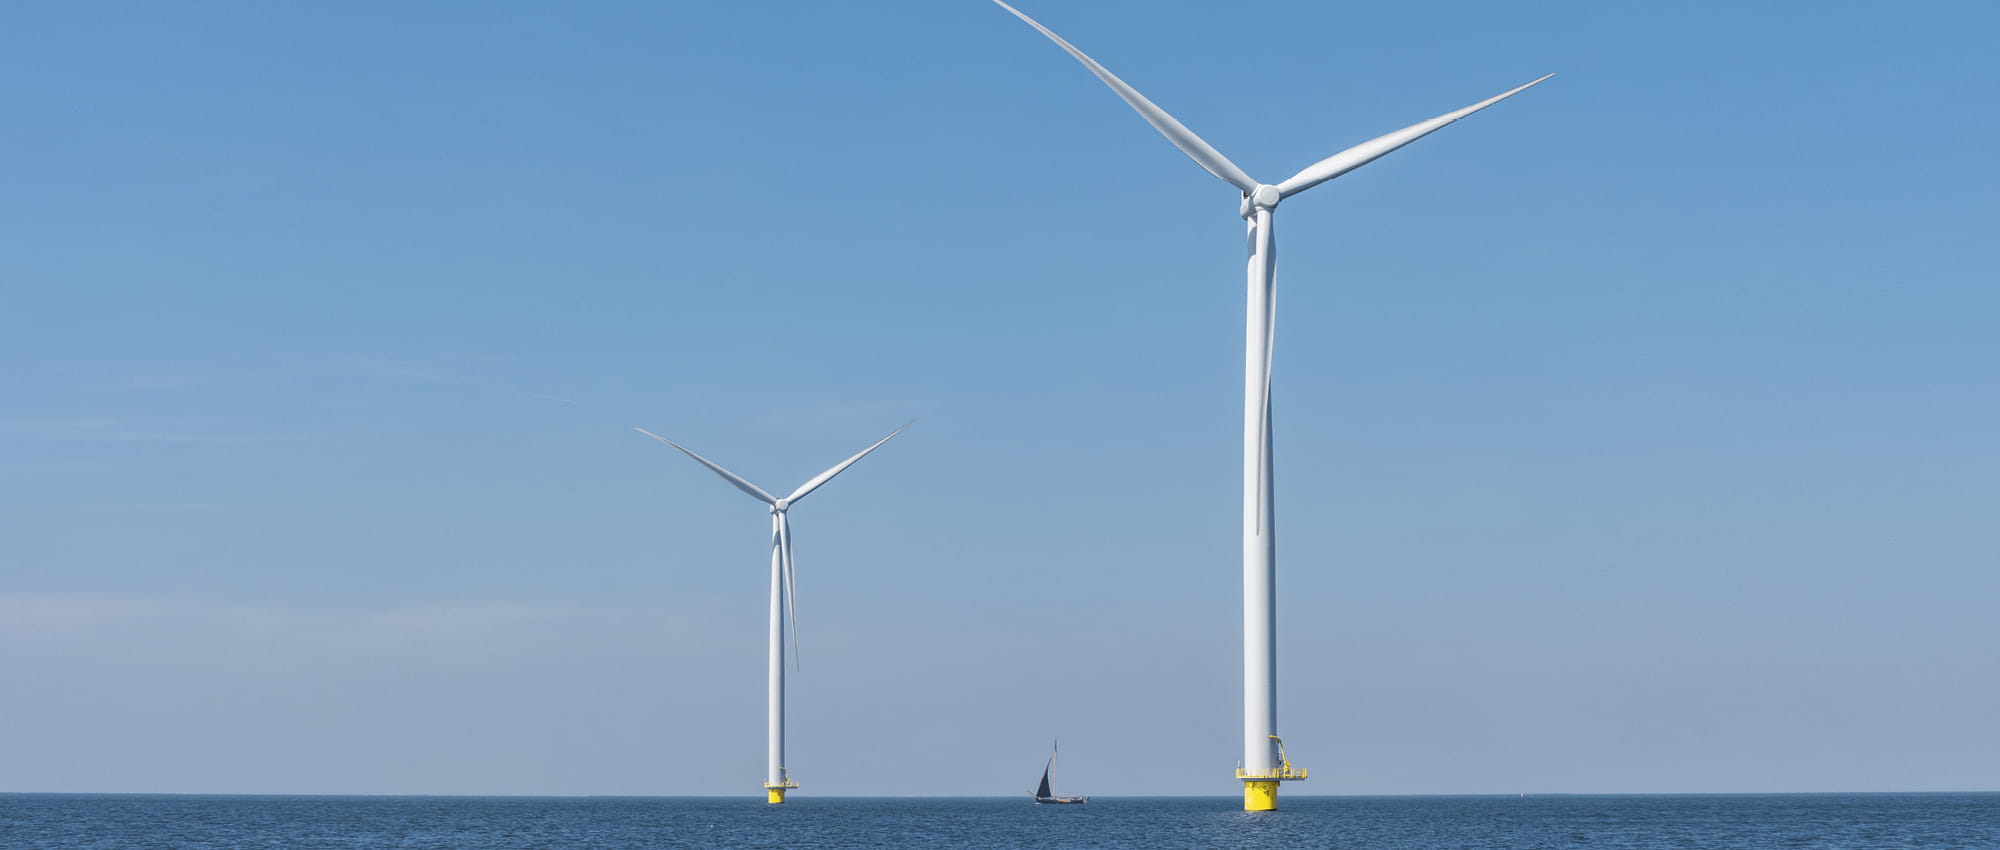 Wind turbines stand in the sea. Copyright: Shutterstock: Fokke Baarssen